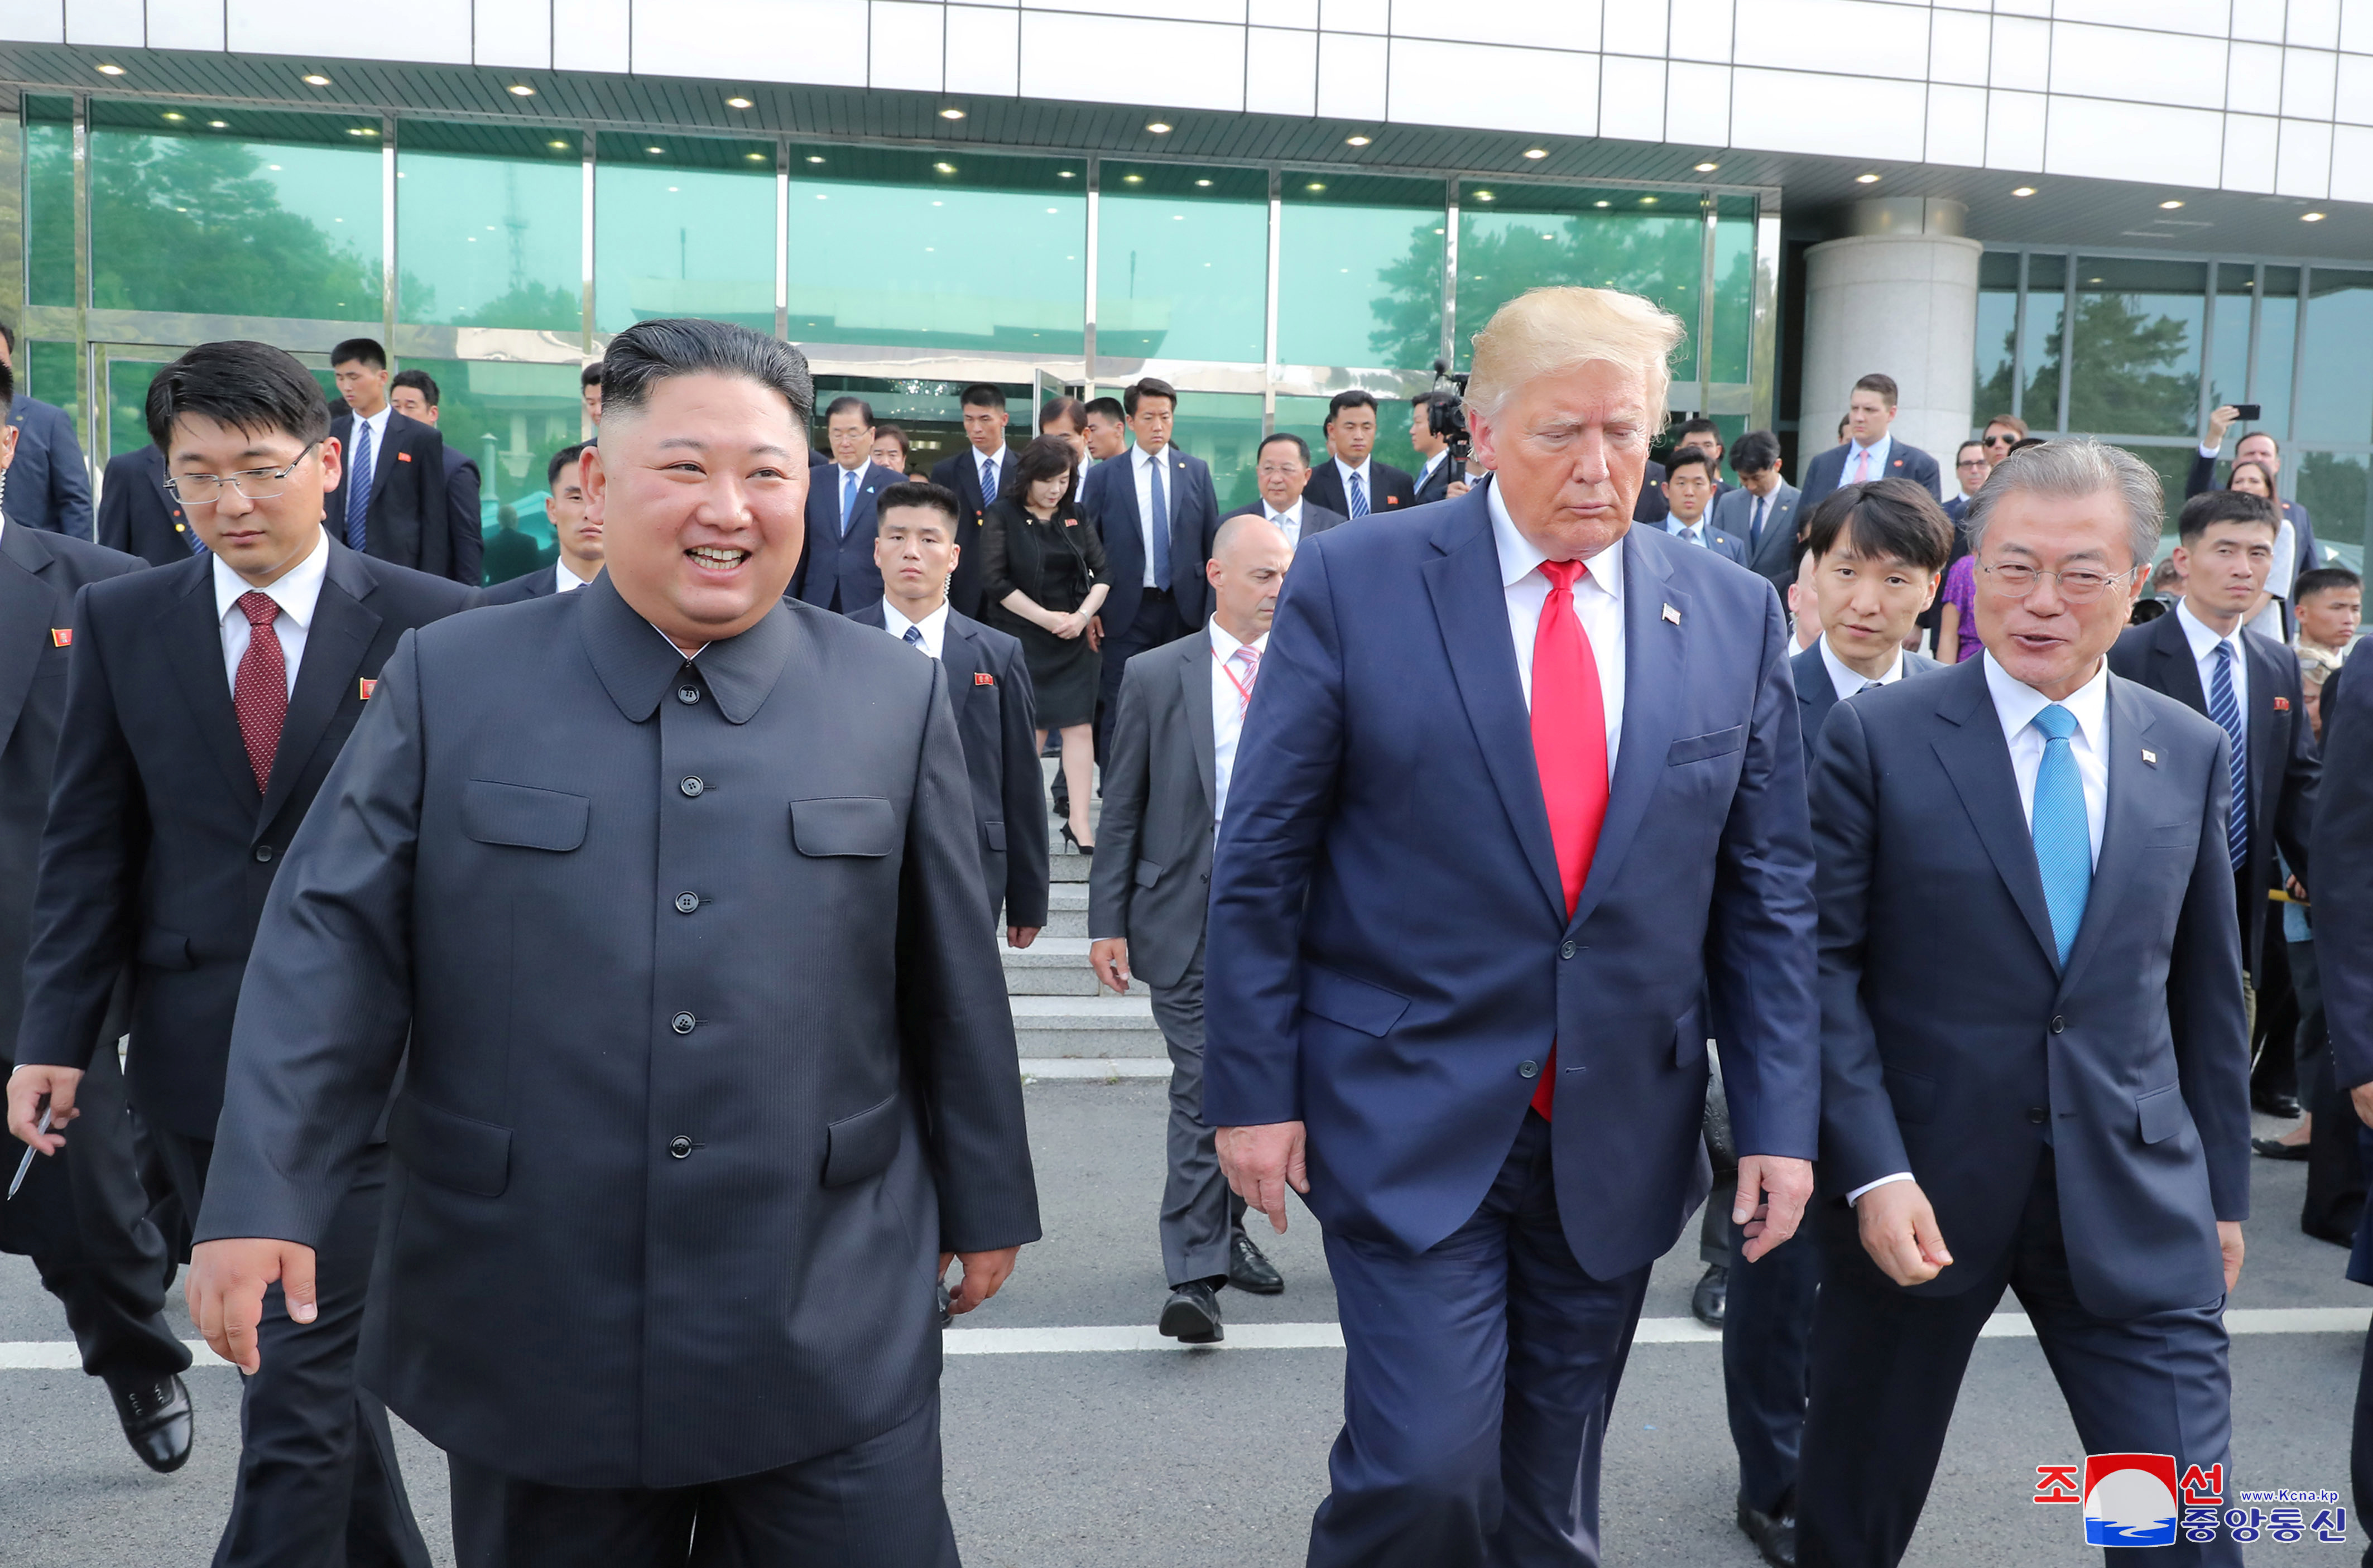 U.S. President Donald Trump, North Korean leader Kim Jong Un and South Korea's President Moon Jae-in meet at the demilitarized zone (DMZ) separating the two Koreas, in Panmunjom, South Korea, June 30, 2019. KCNA via REUTERS